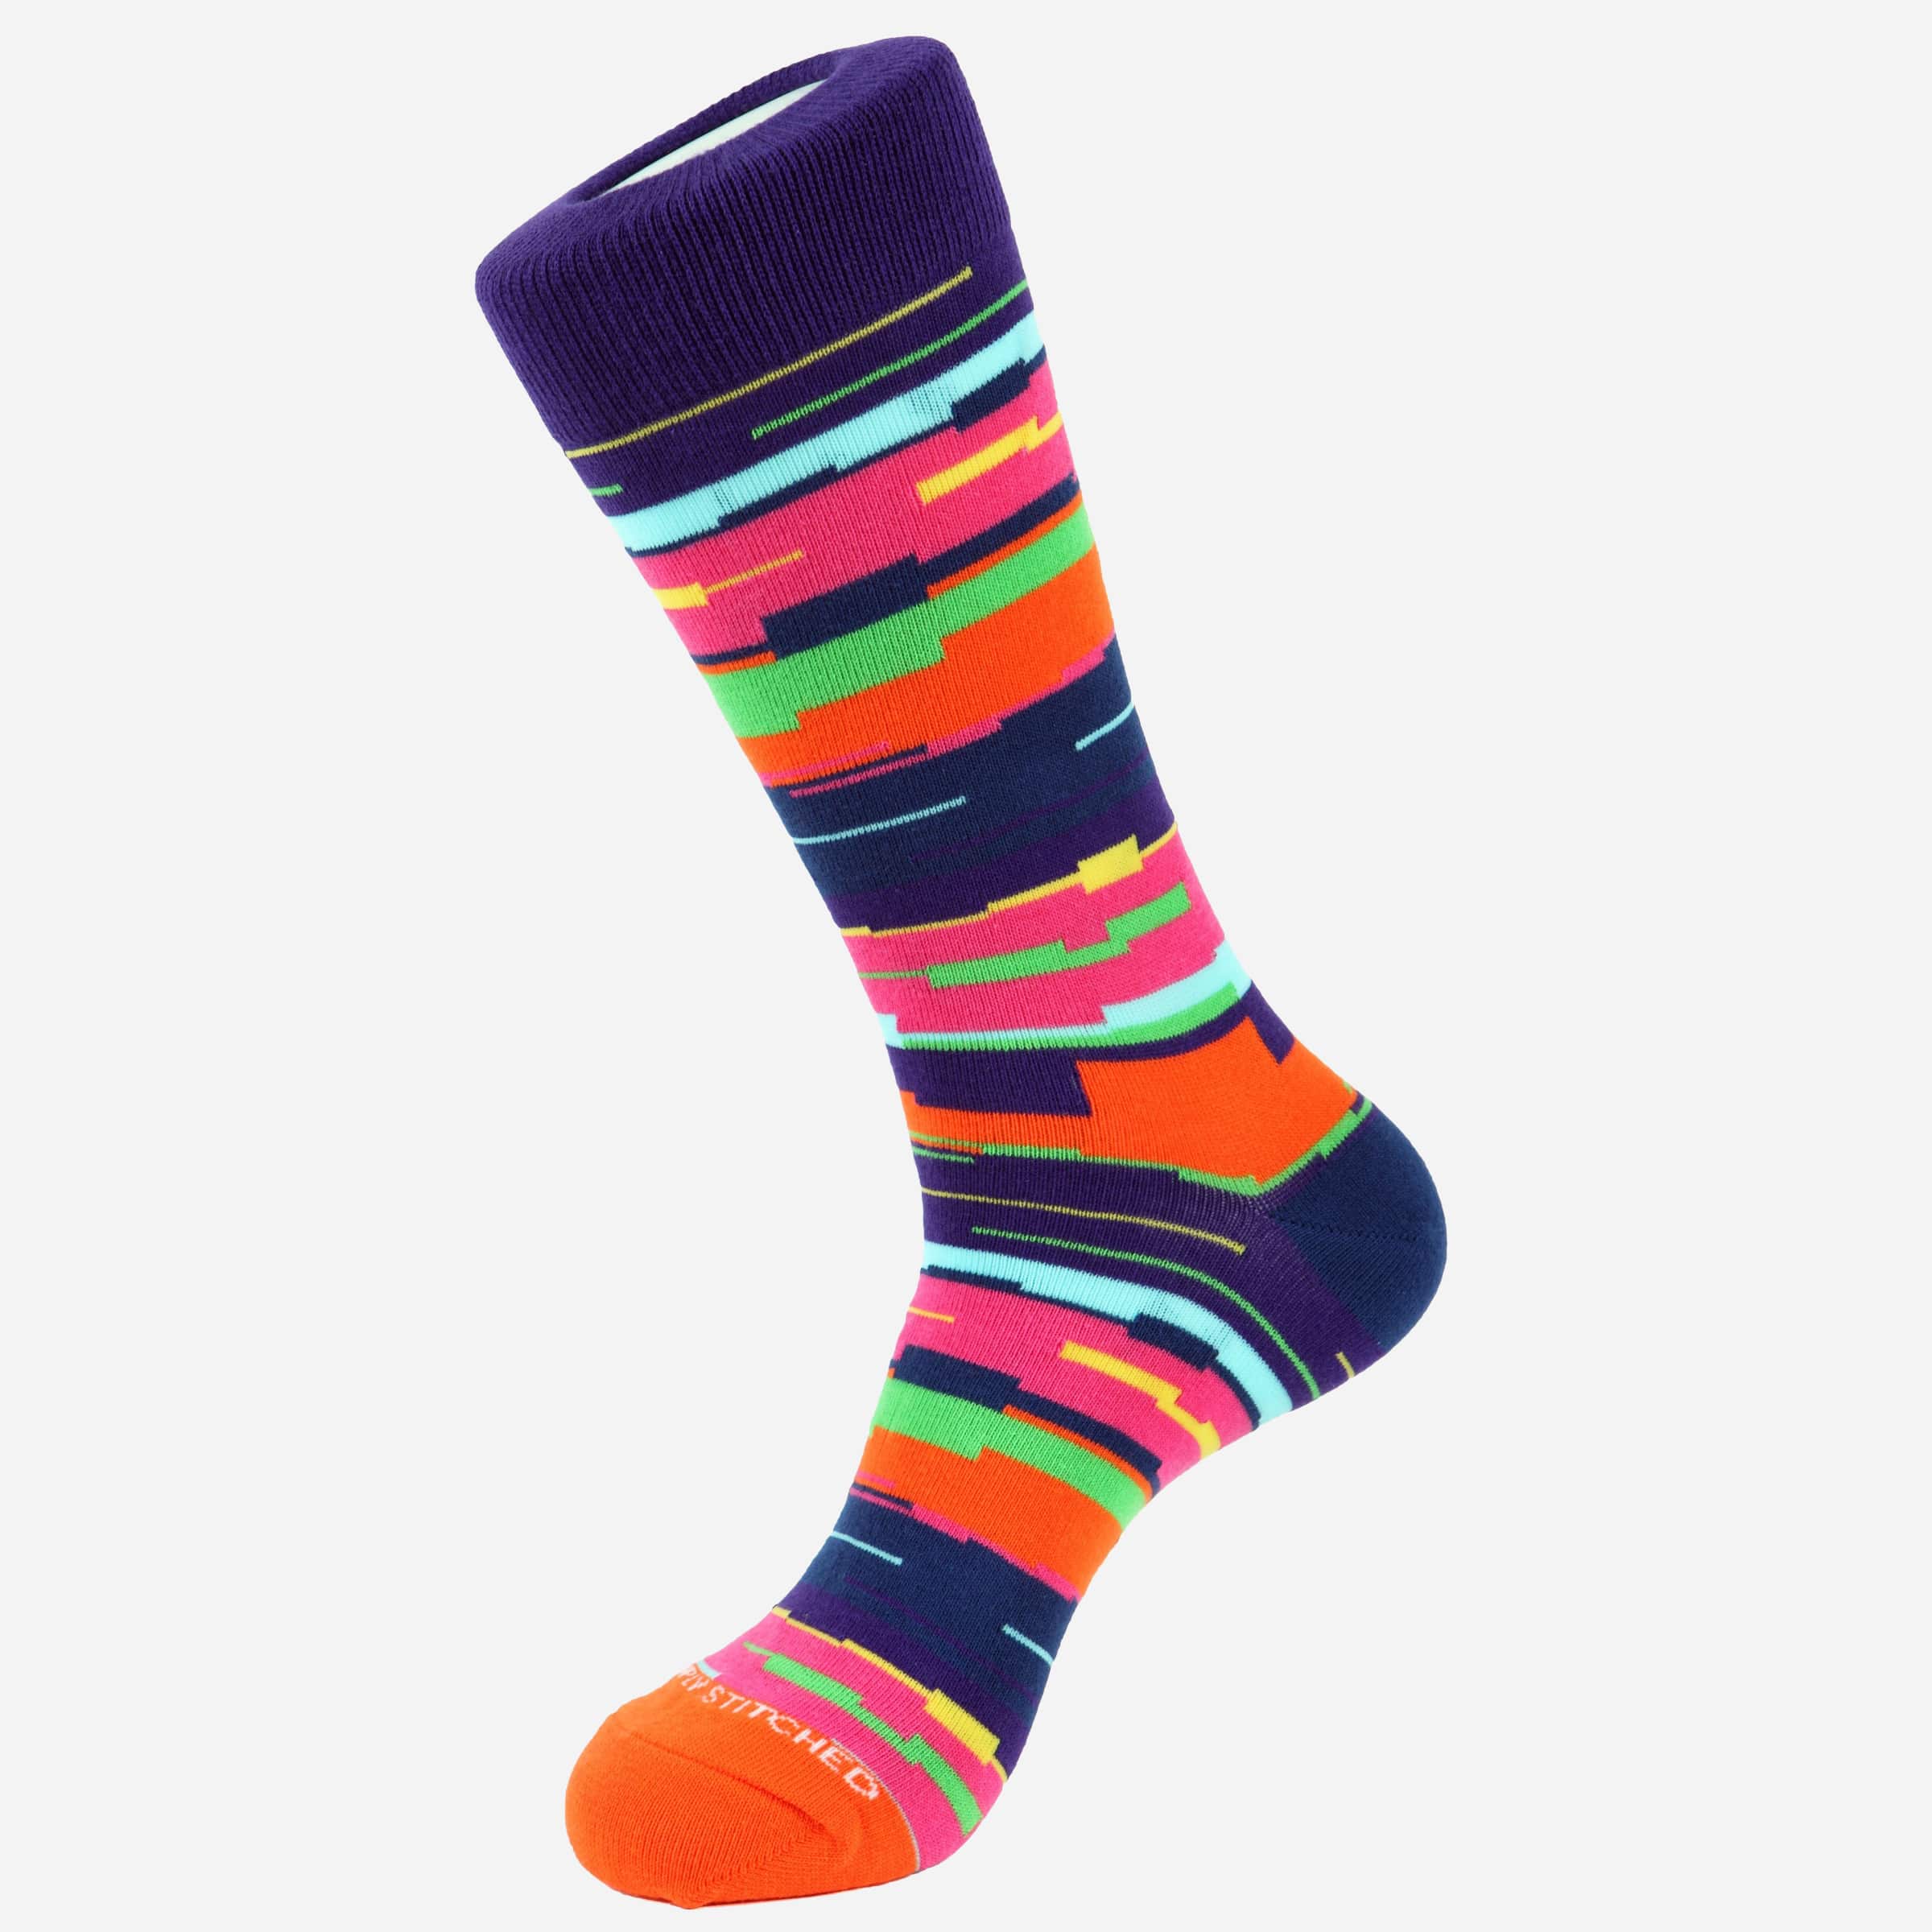 Glitch Stripe Socks - Men's Socks at Menzclub